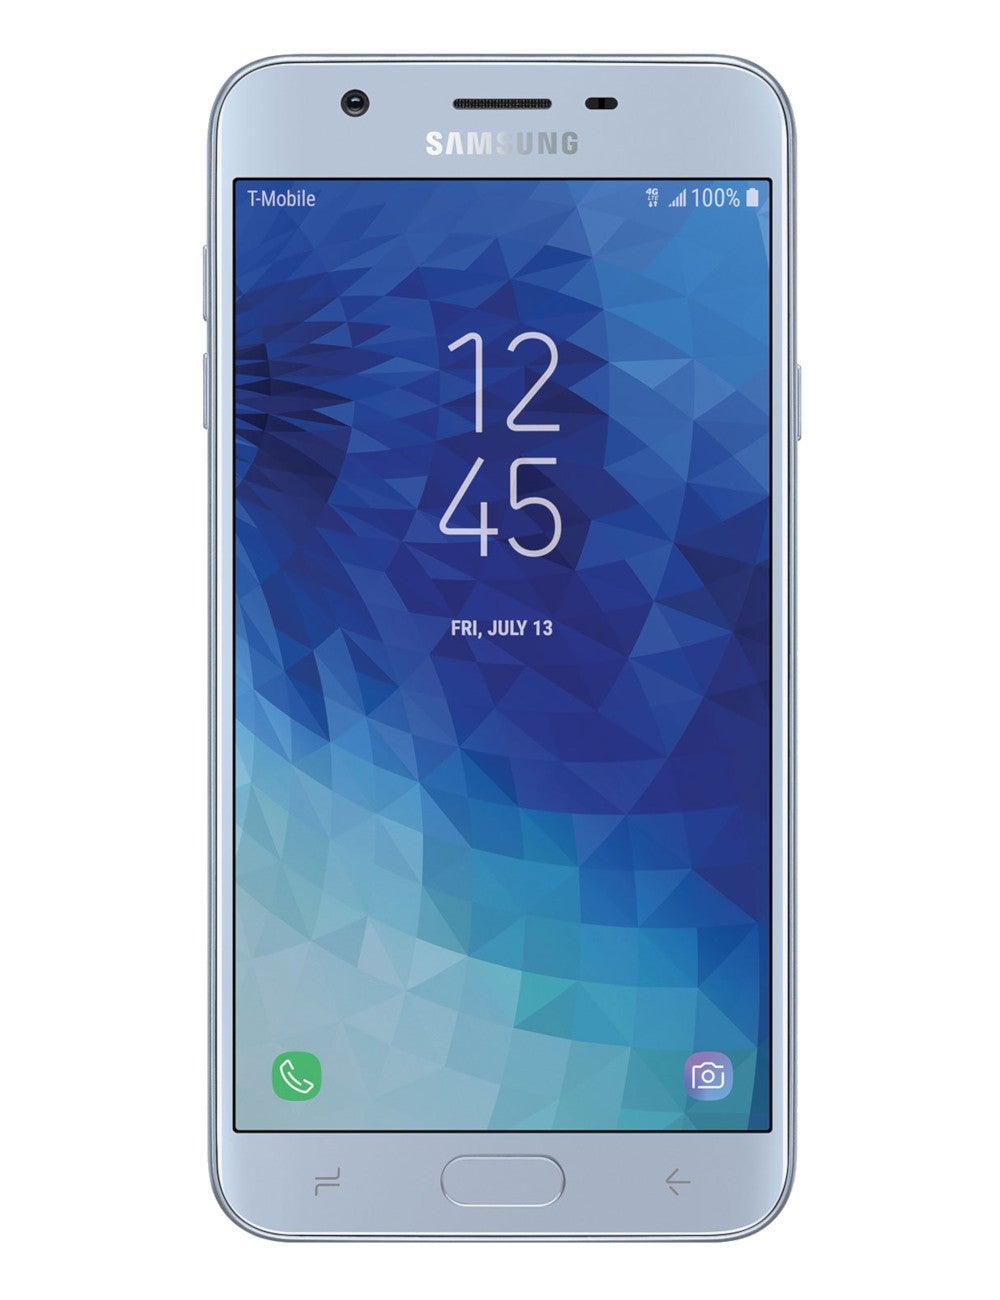 Samsung Galaxy J7 Star specs PhoneArena